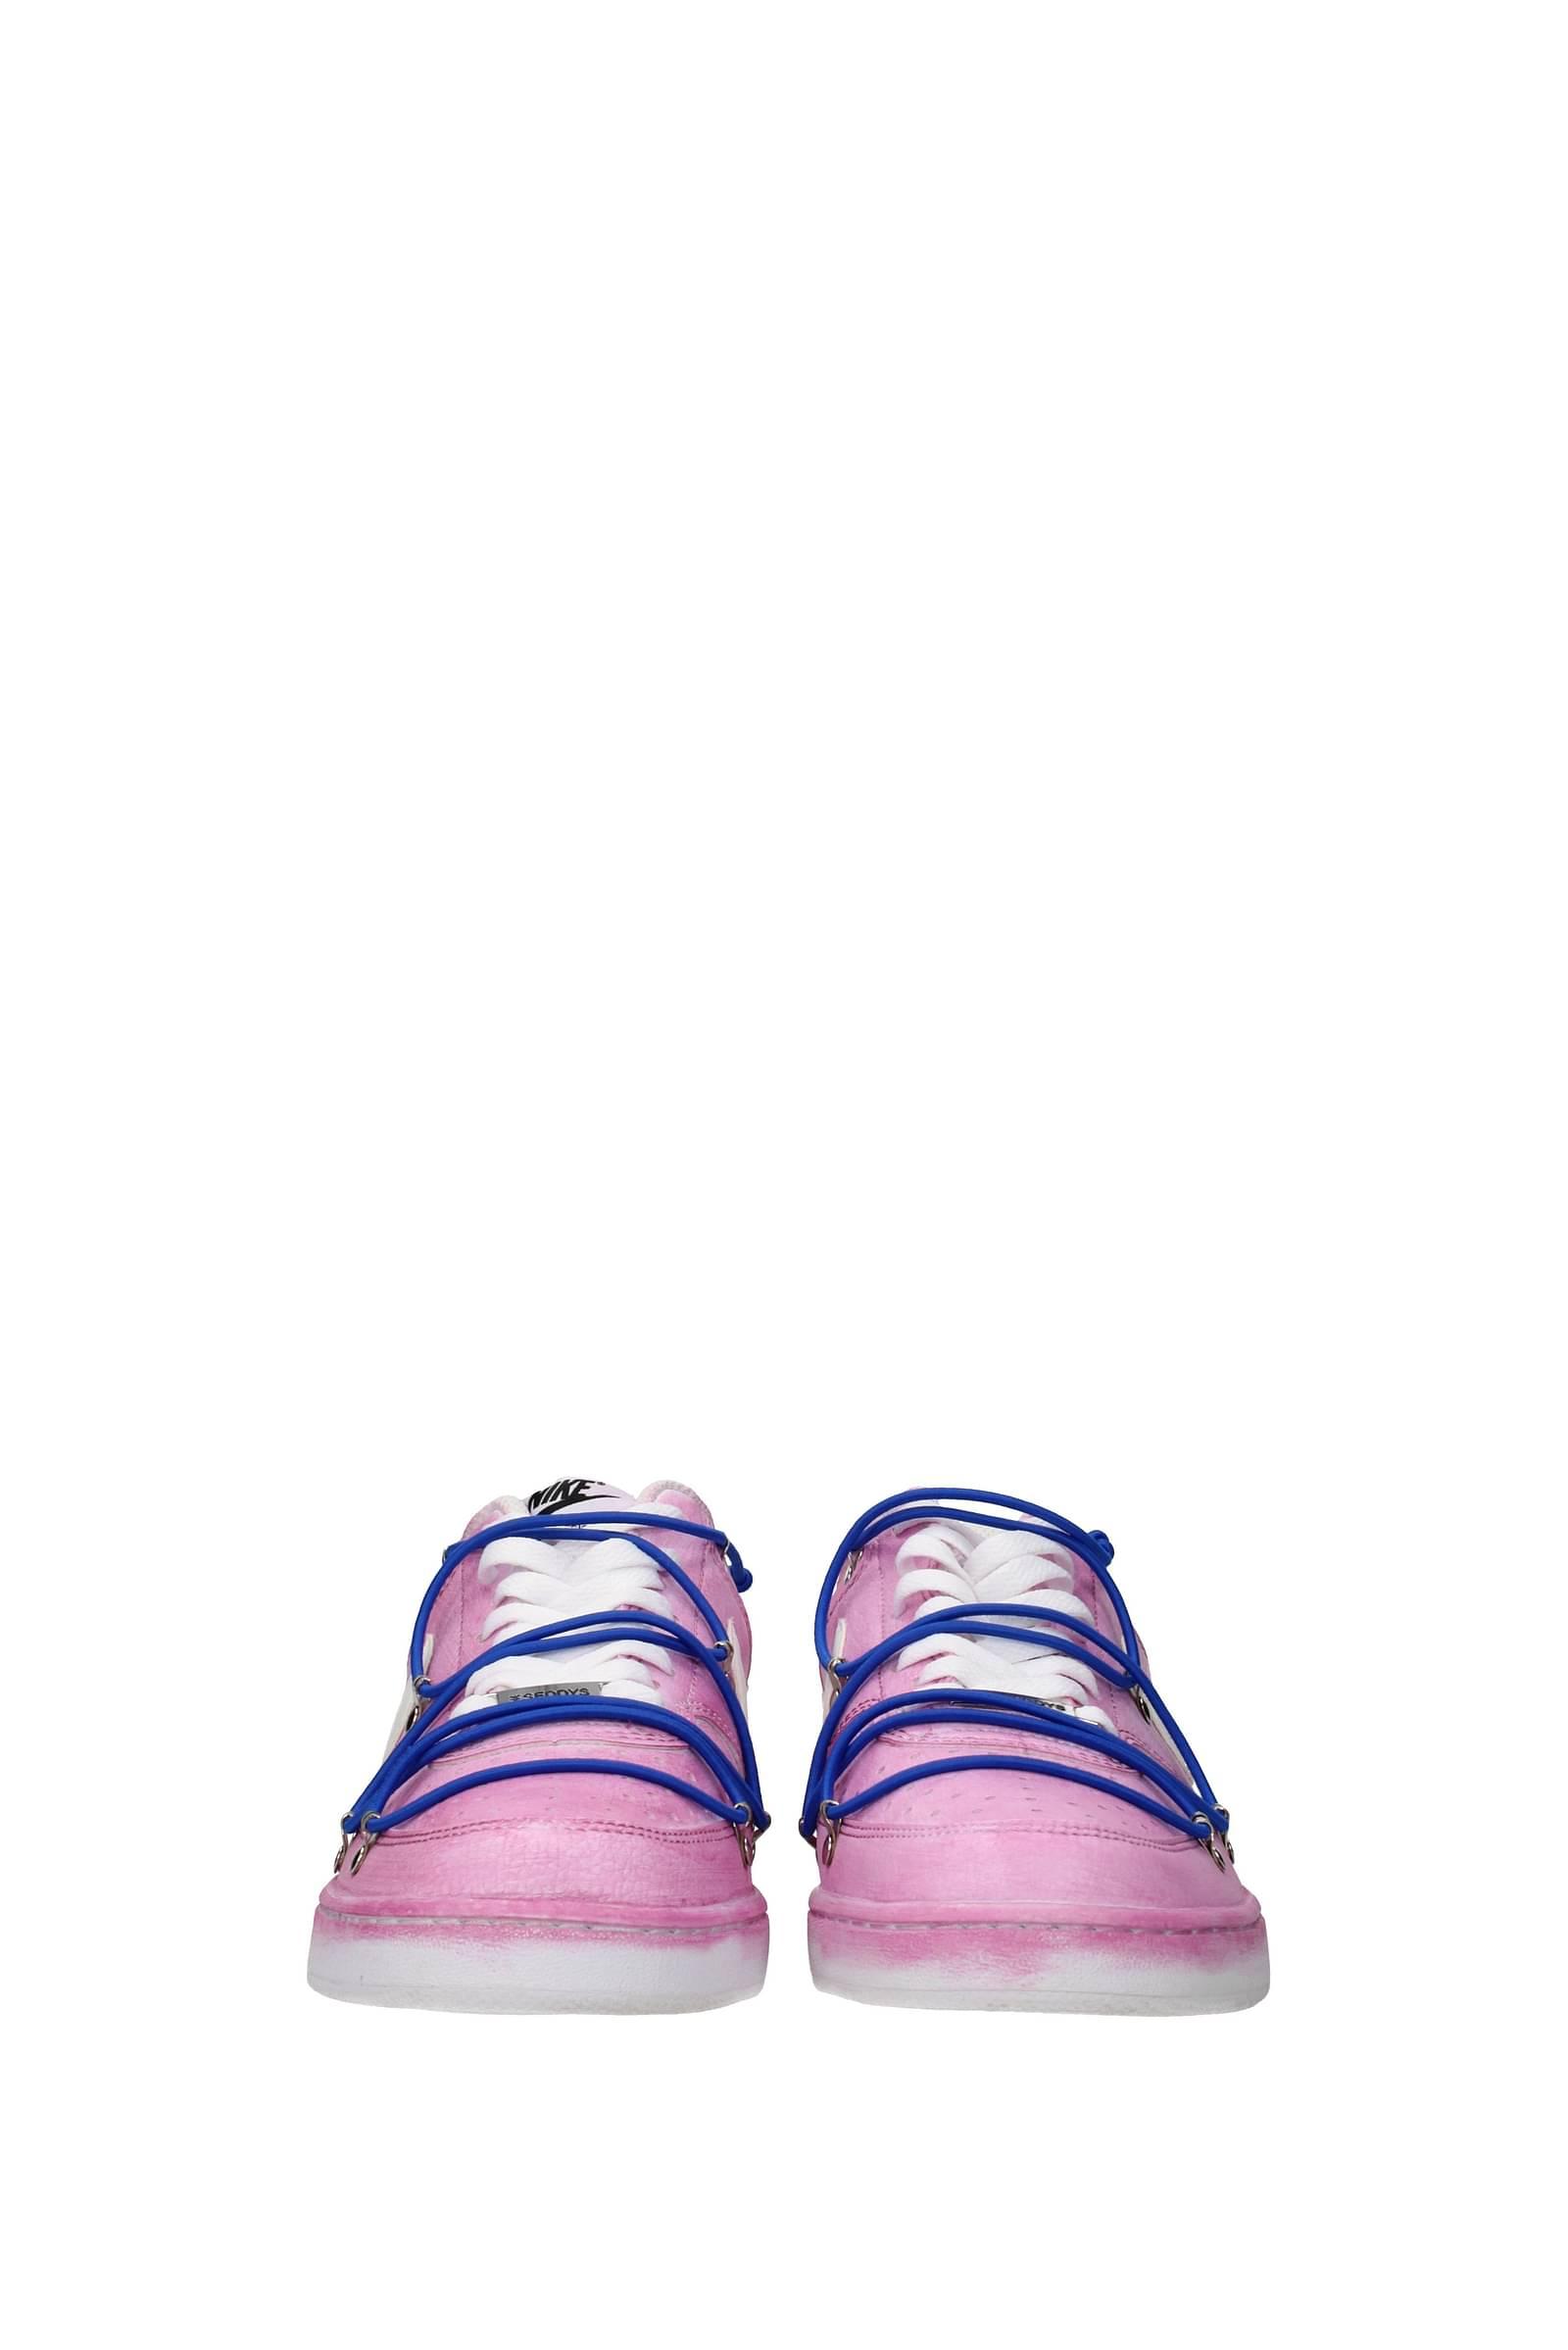 Nike Sneakers Leather Pink in Purple | Lyst